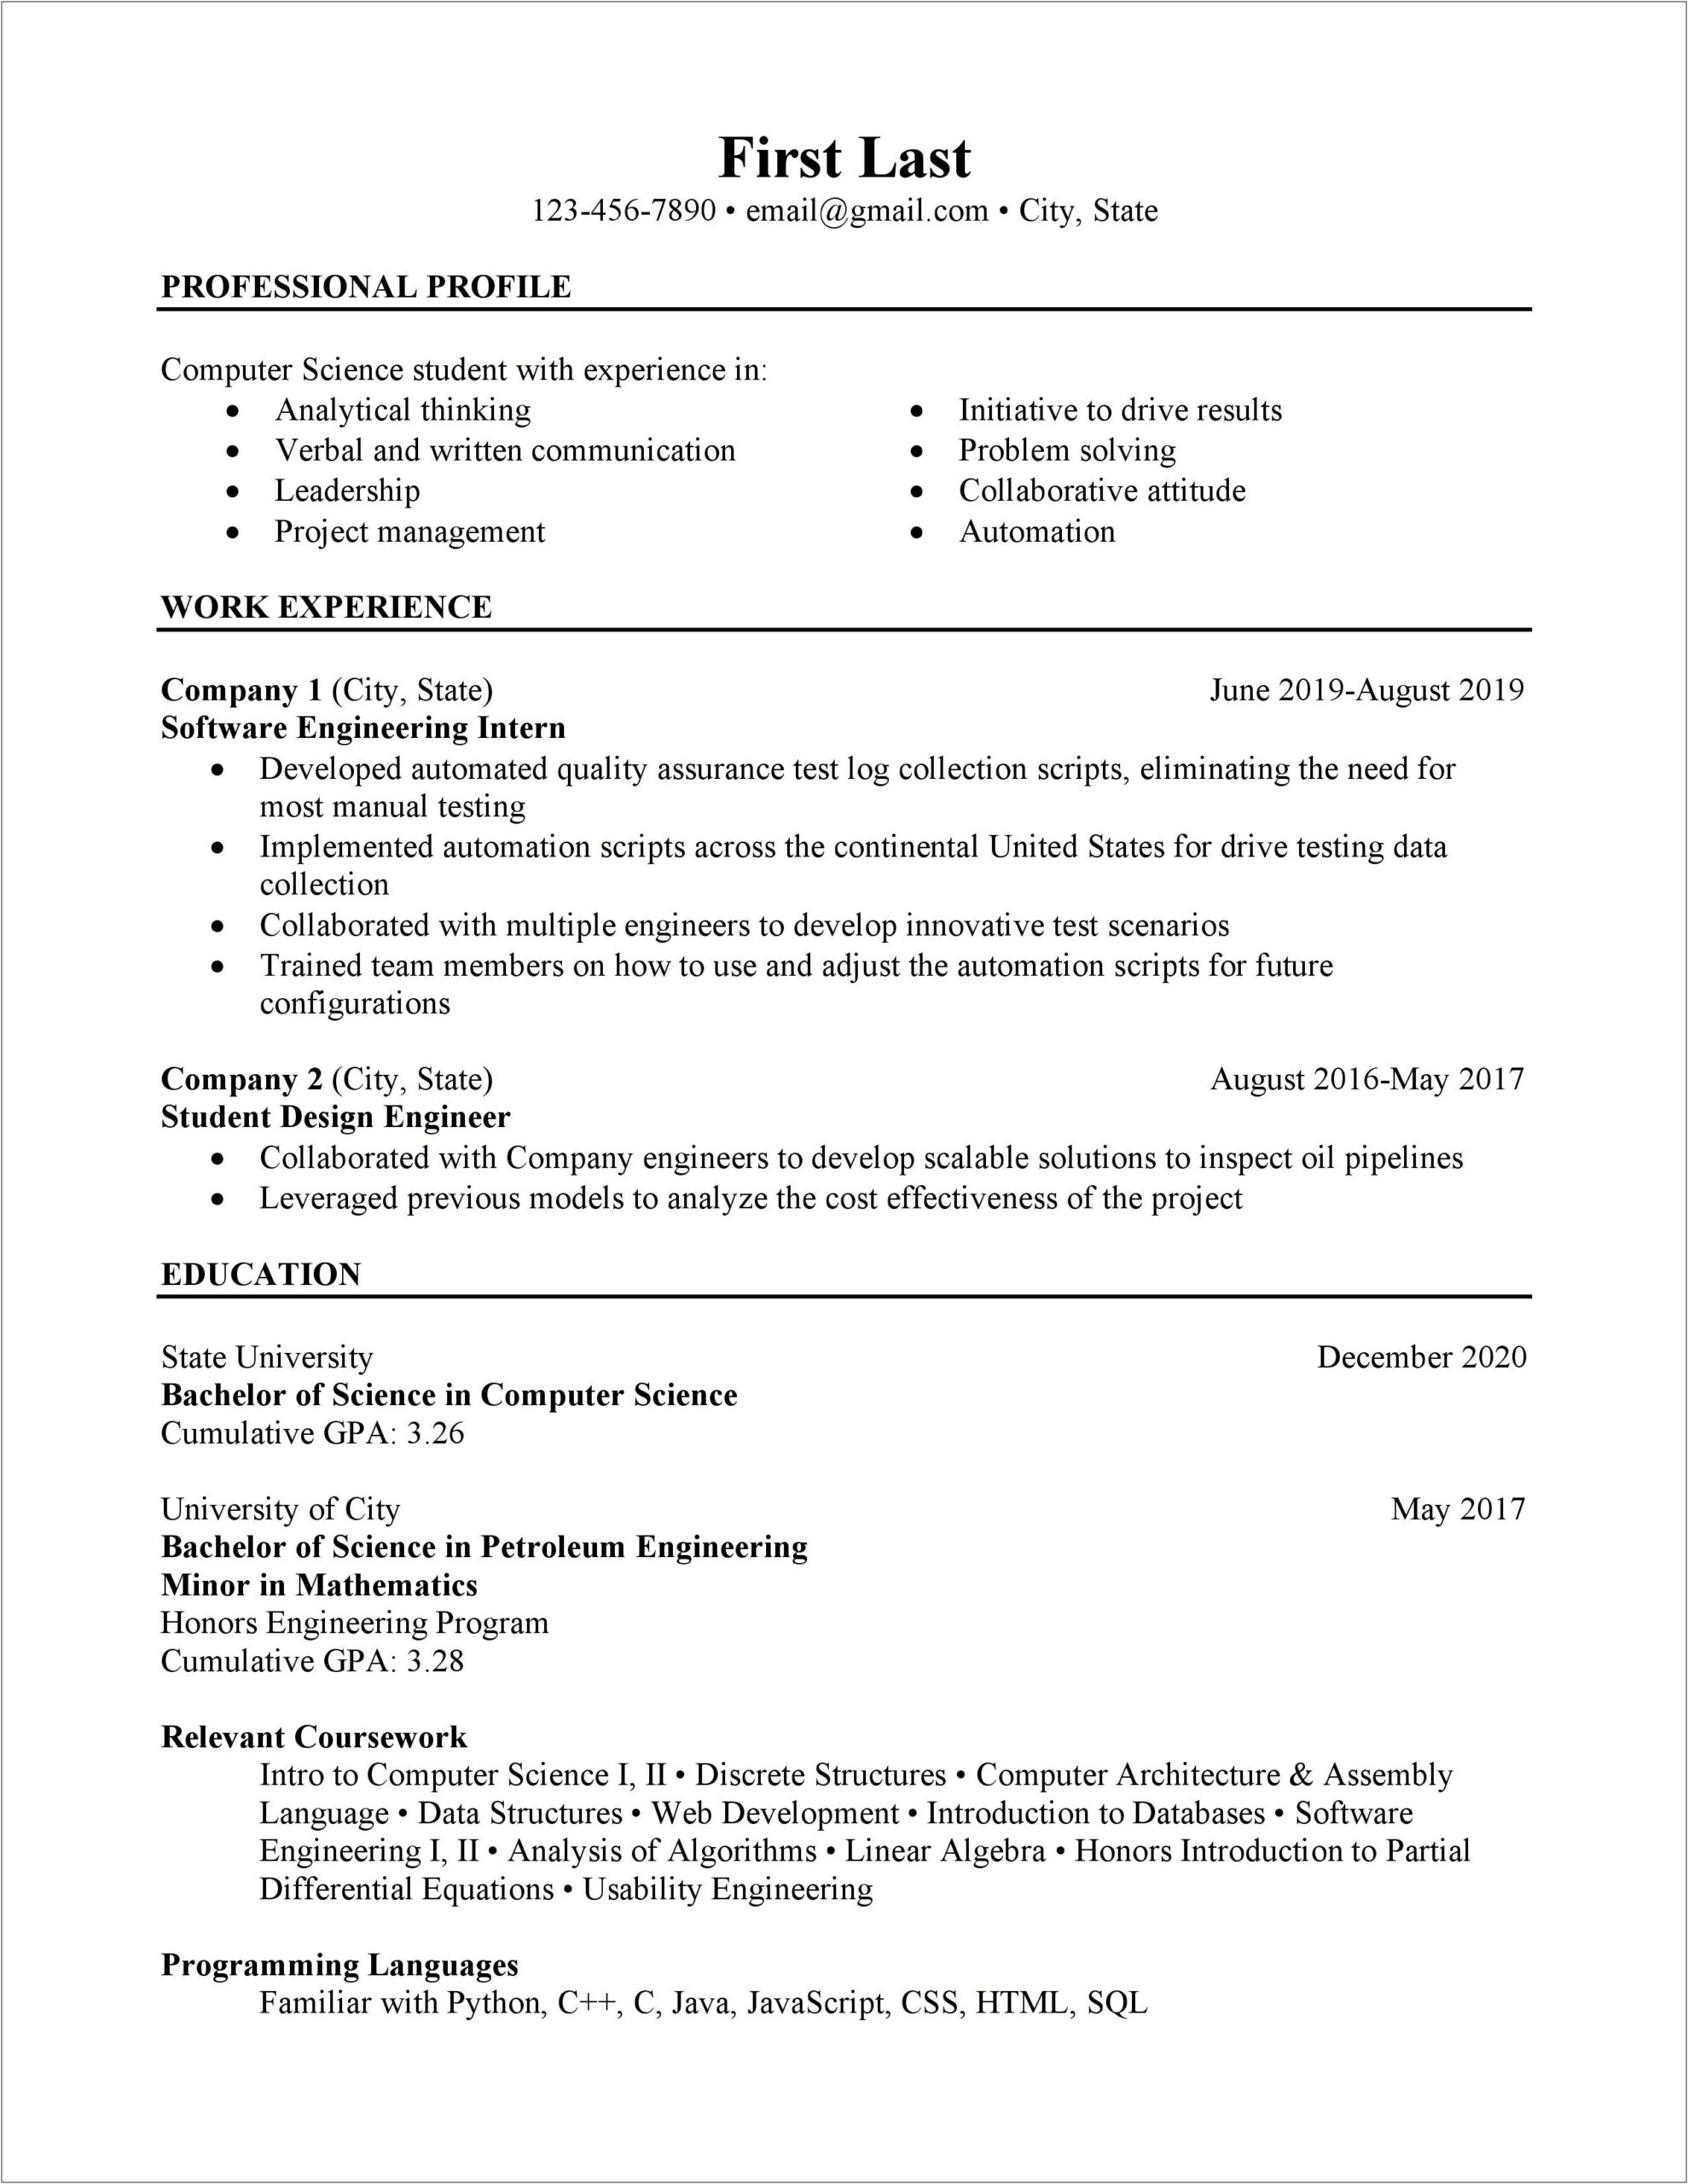 Computer Science Graduate Resume Examples